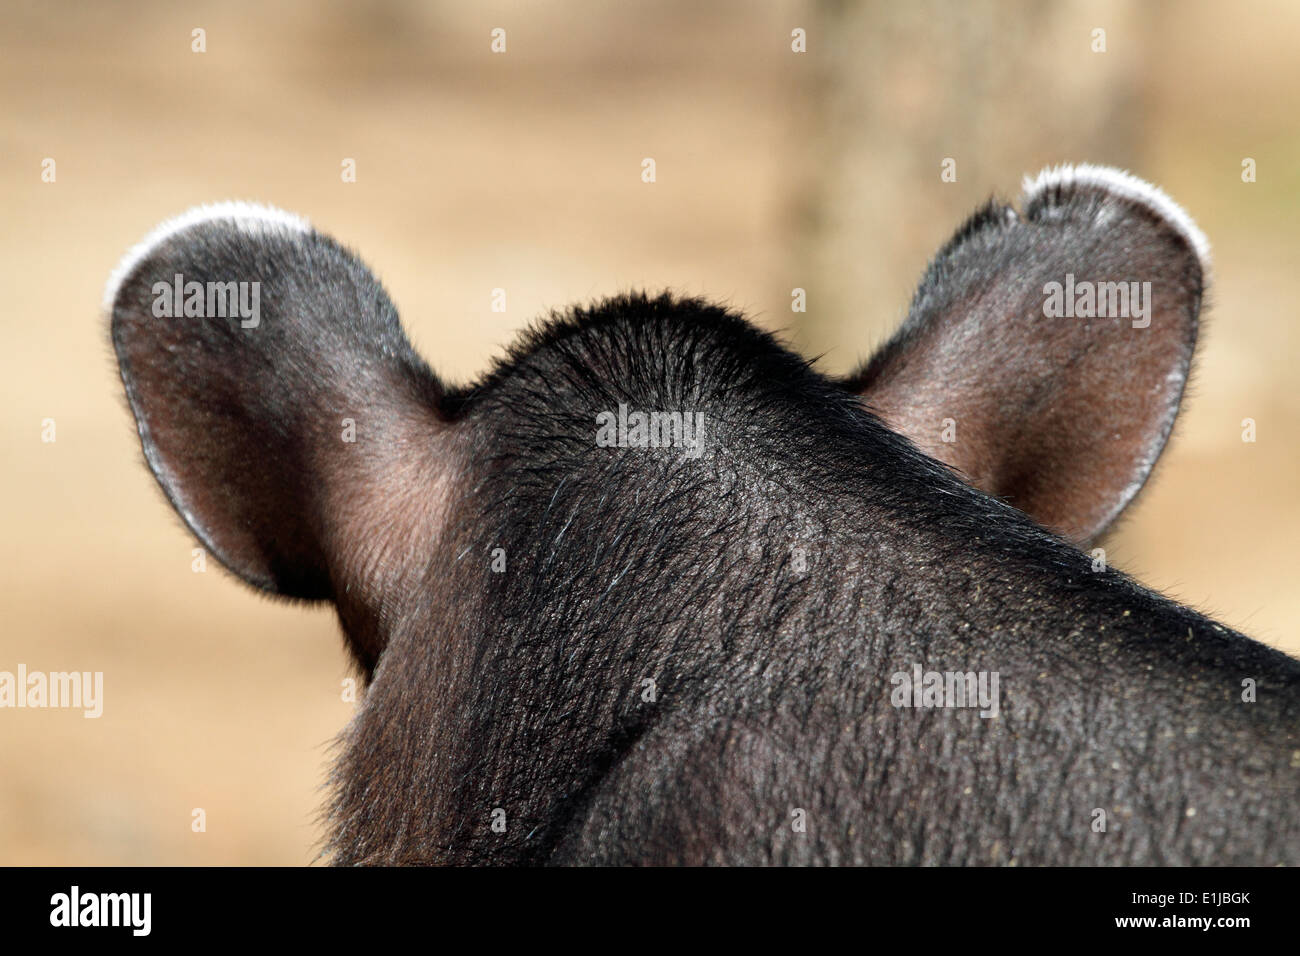 The back of an animals head - all ears. Bergen County Zoo, Van Saun Park, Paramus, New Jersey, USA Stock Photo